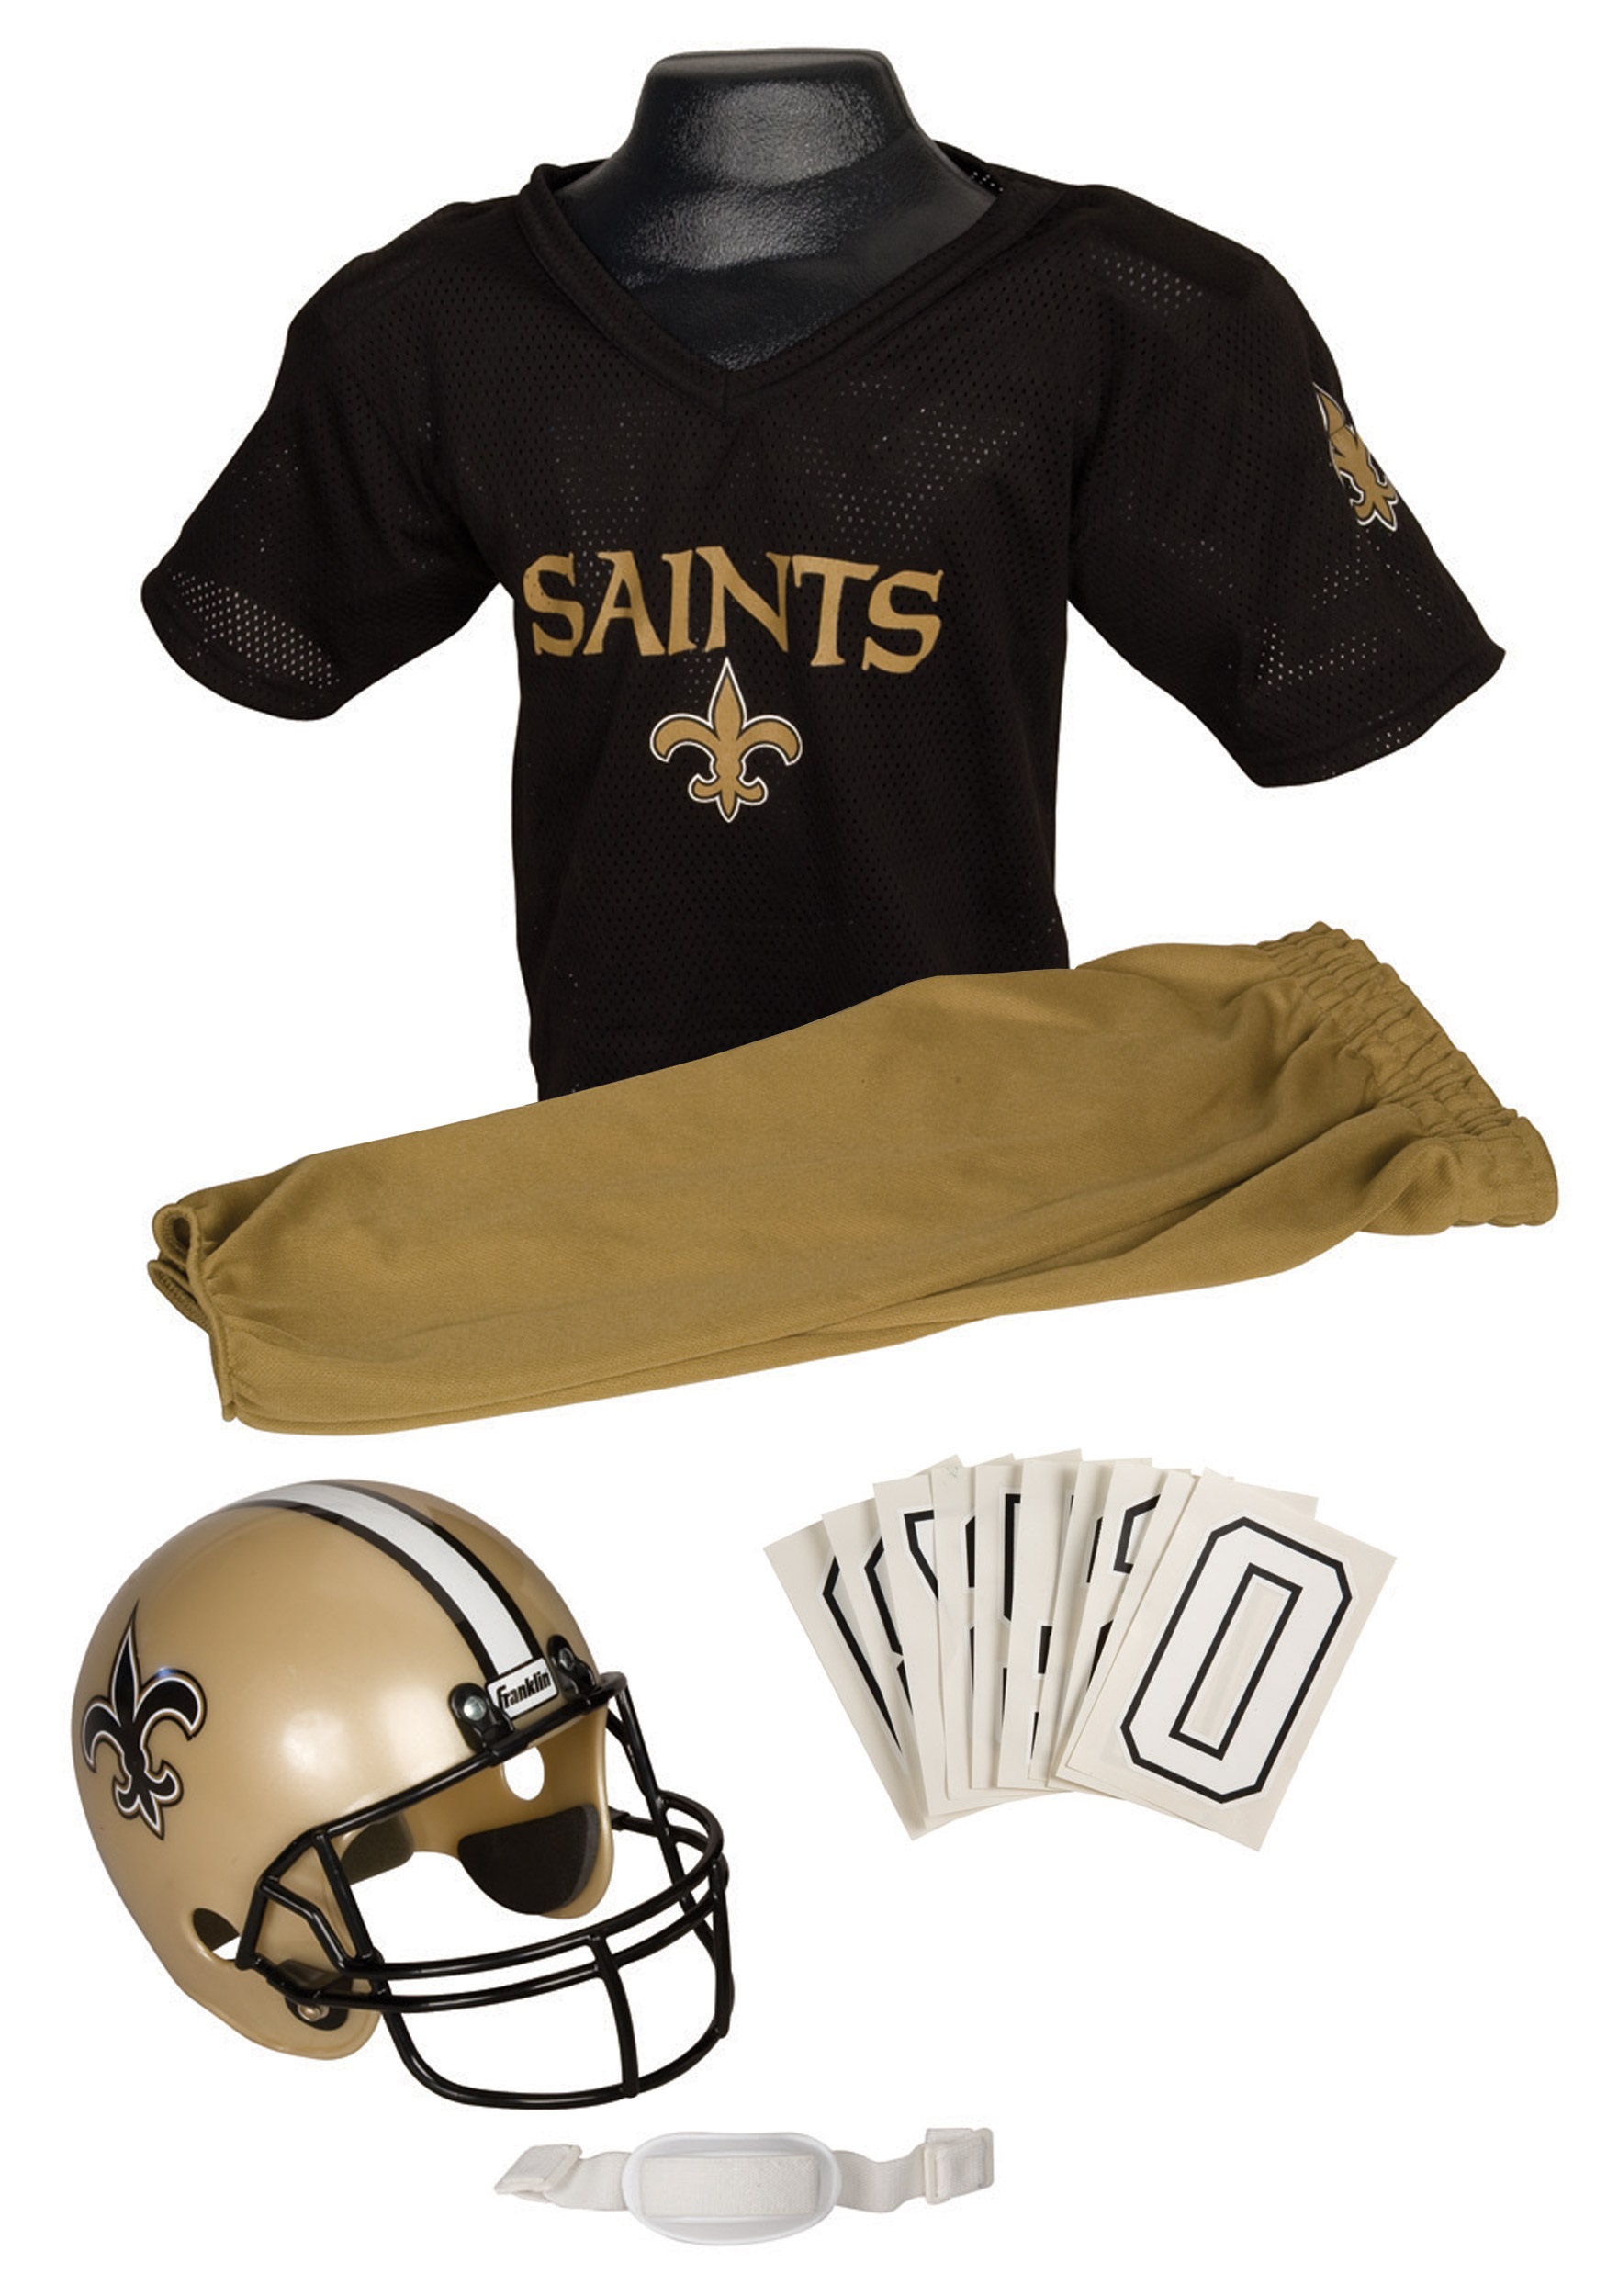 Kids Saints NFL Uniform Set